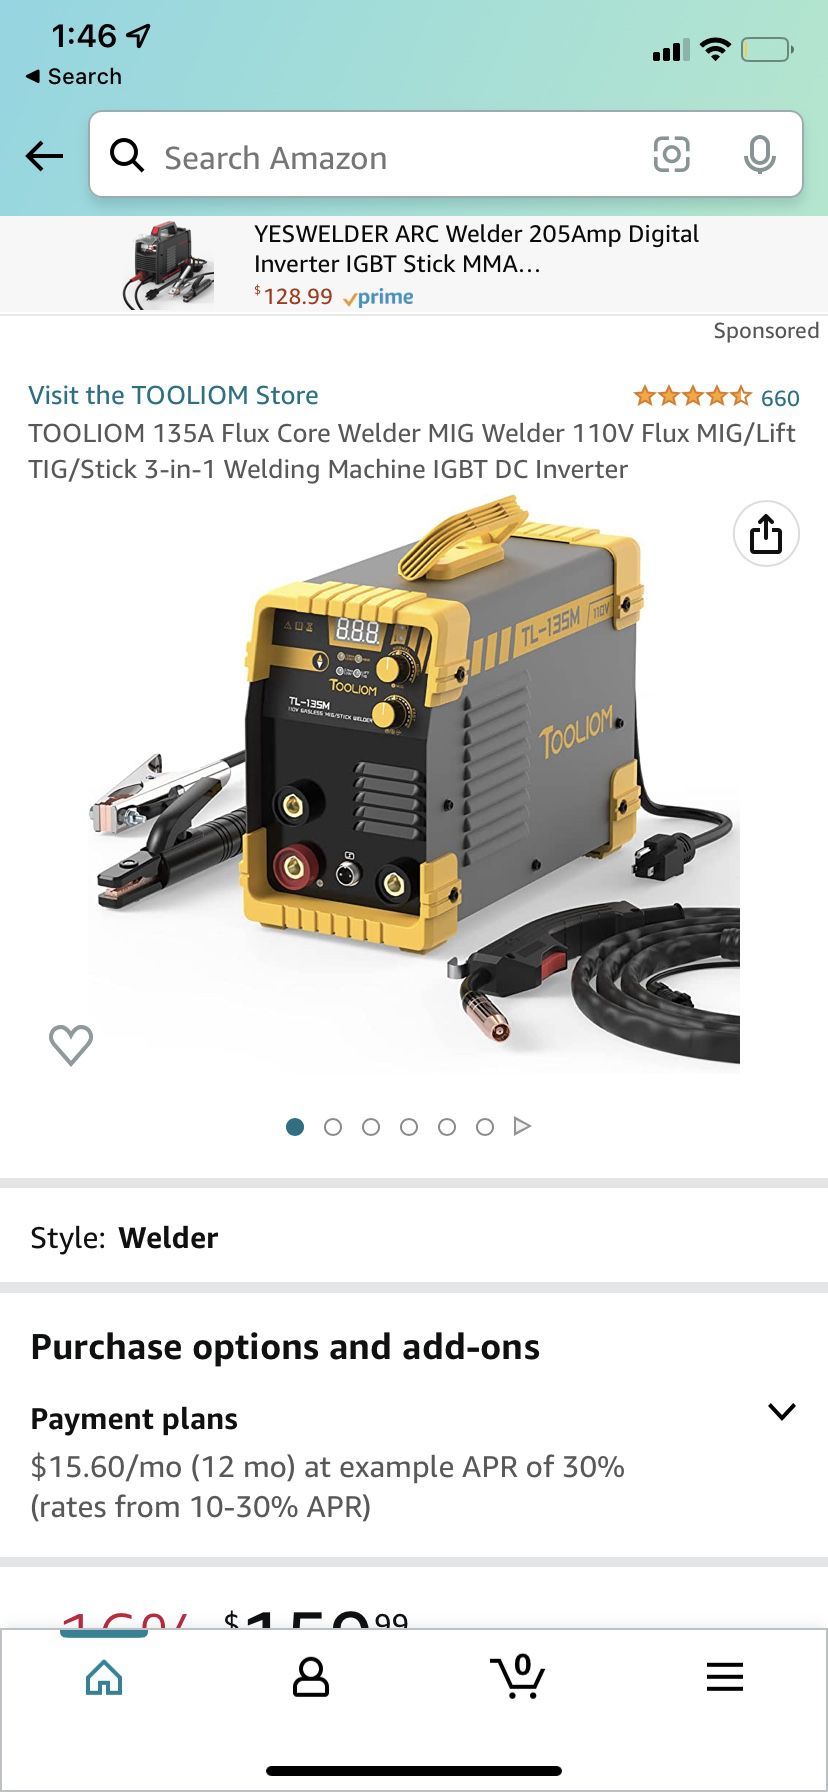 Tool Welder Machine